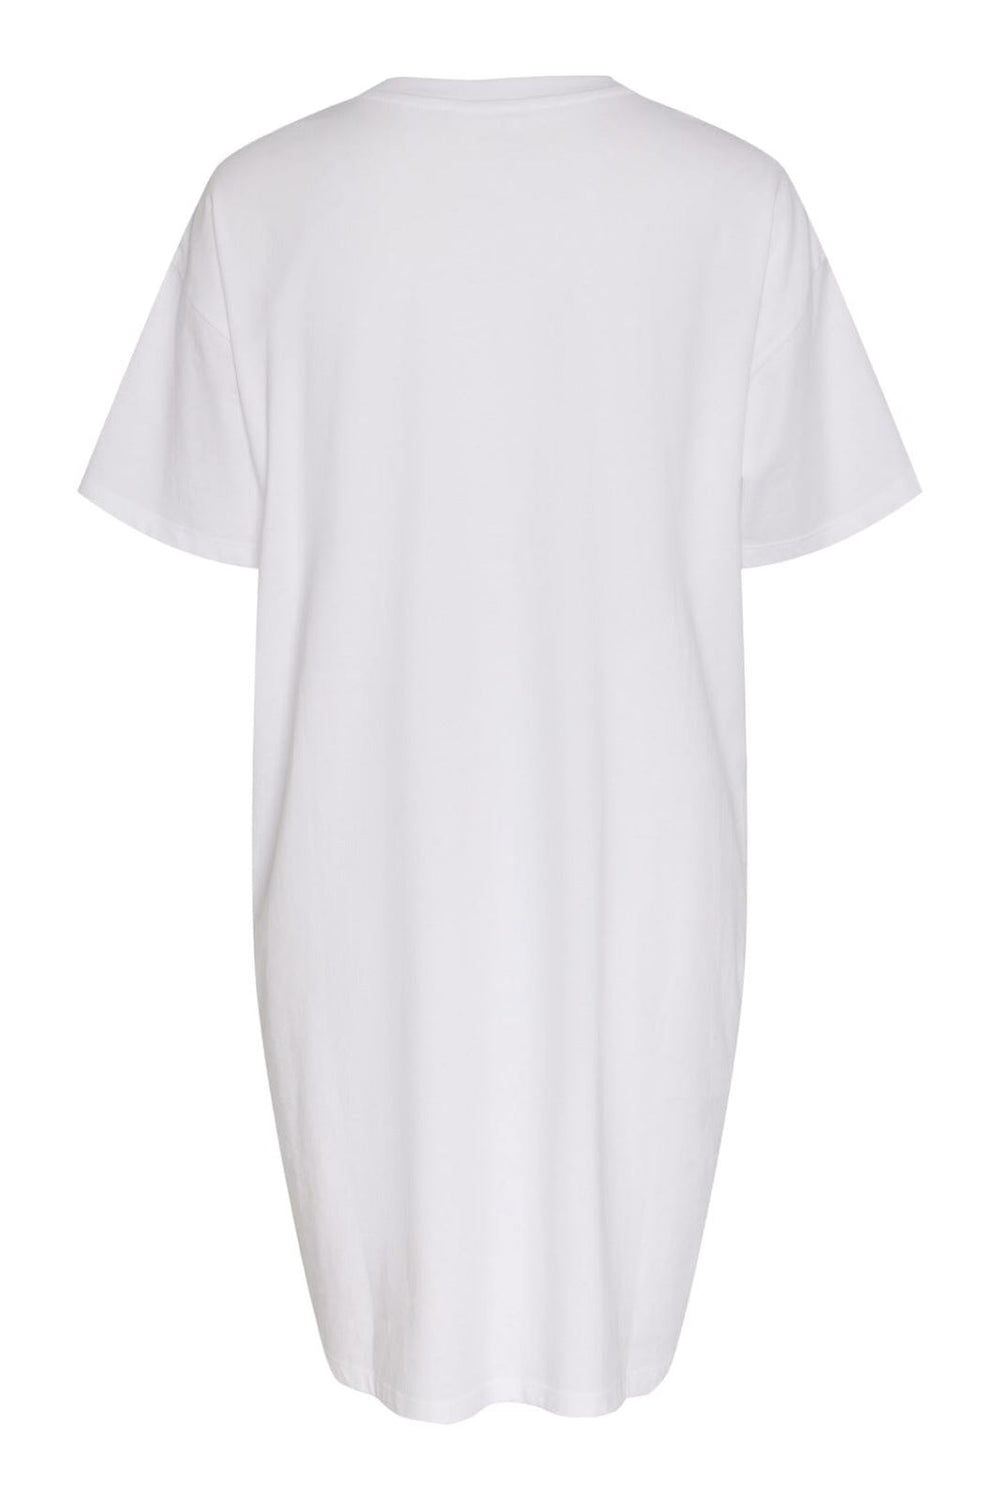 Pieces - Pcria Ss Dress - 4476702 Bright White Kjoler 